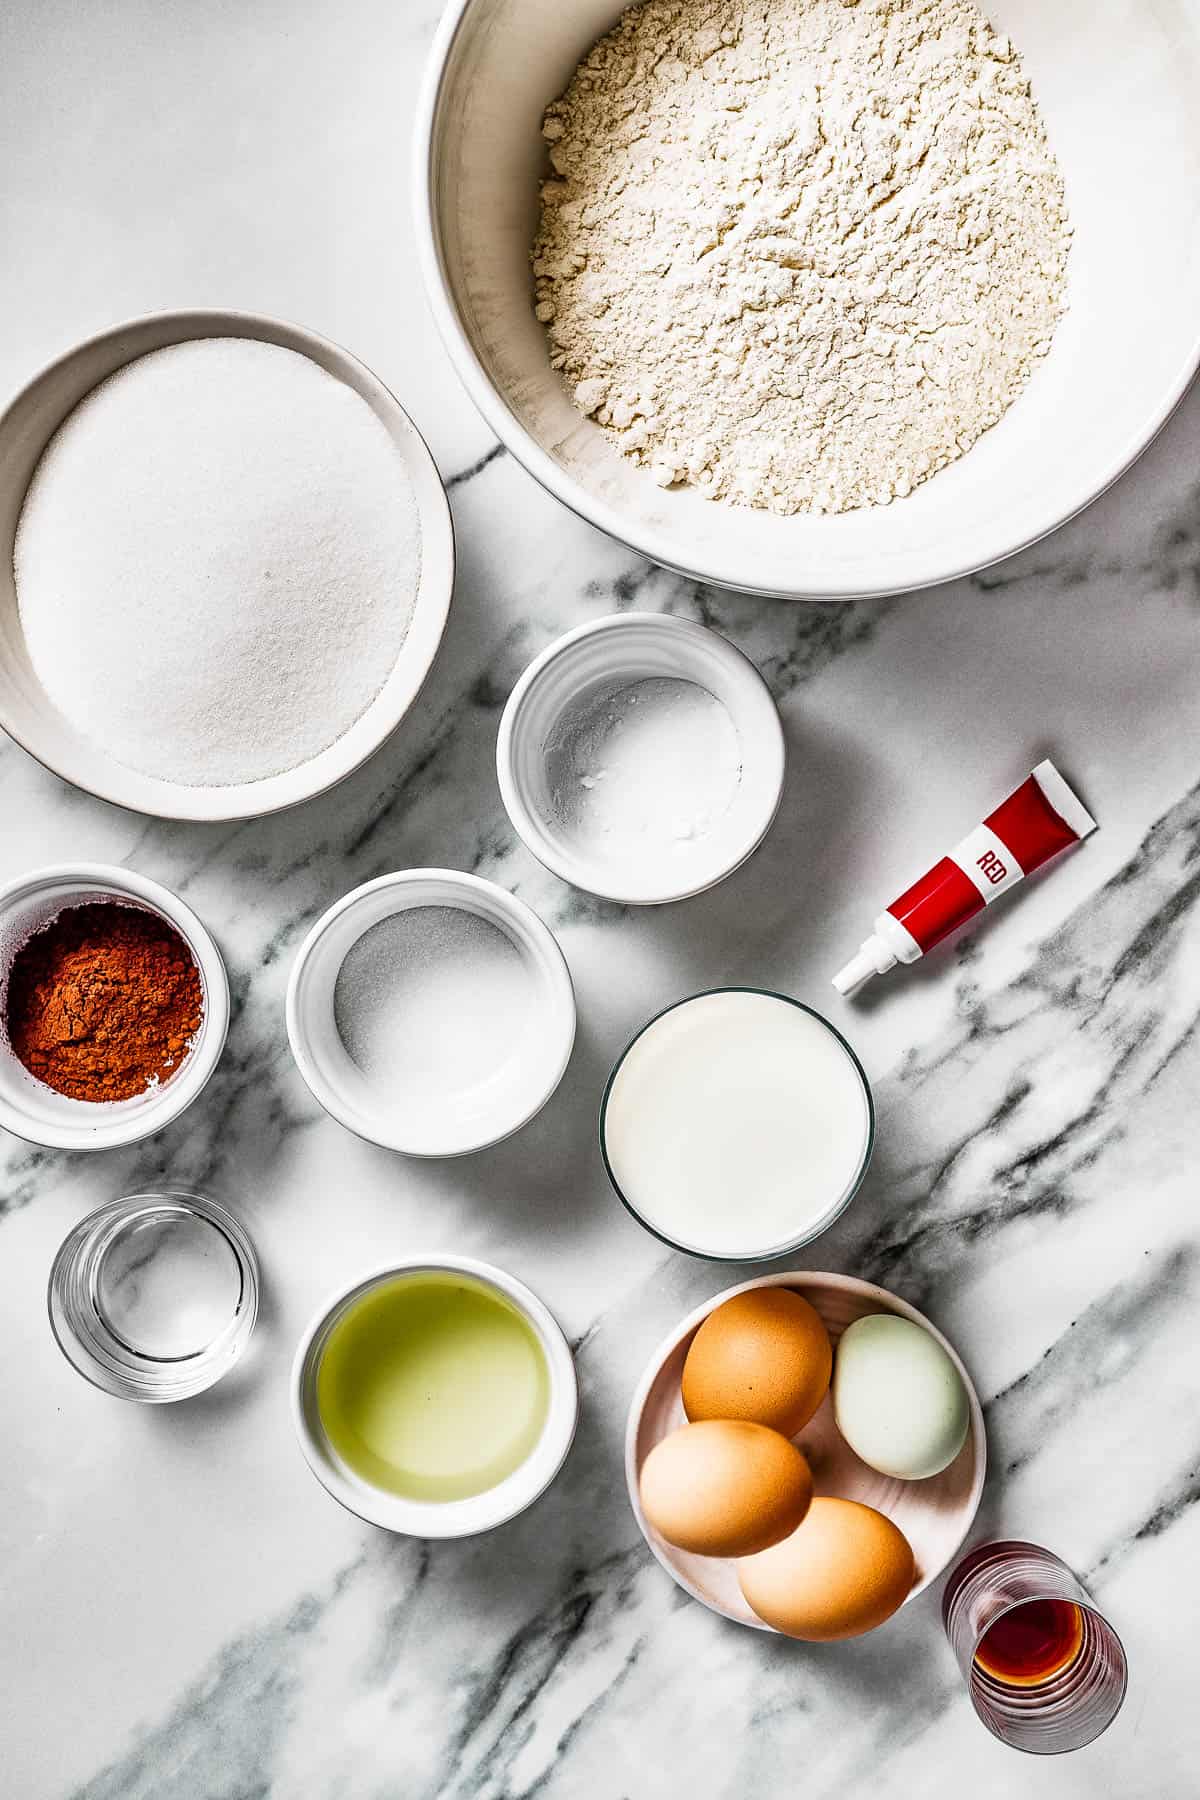 From top left: Sugar, baking soda, flour, cocoa powder, salt, milk, red food coloring, vinegar, oil, eggs, vanilla.